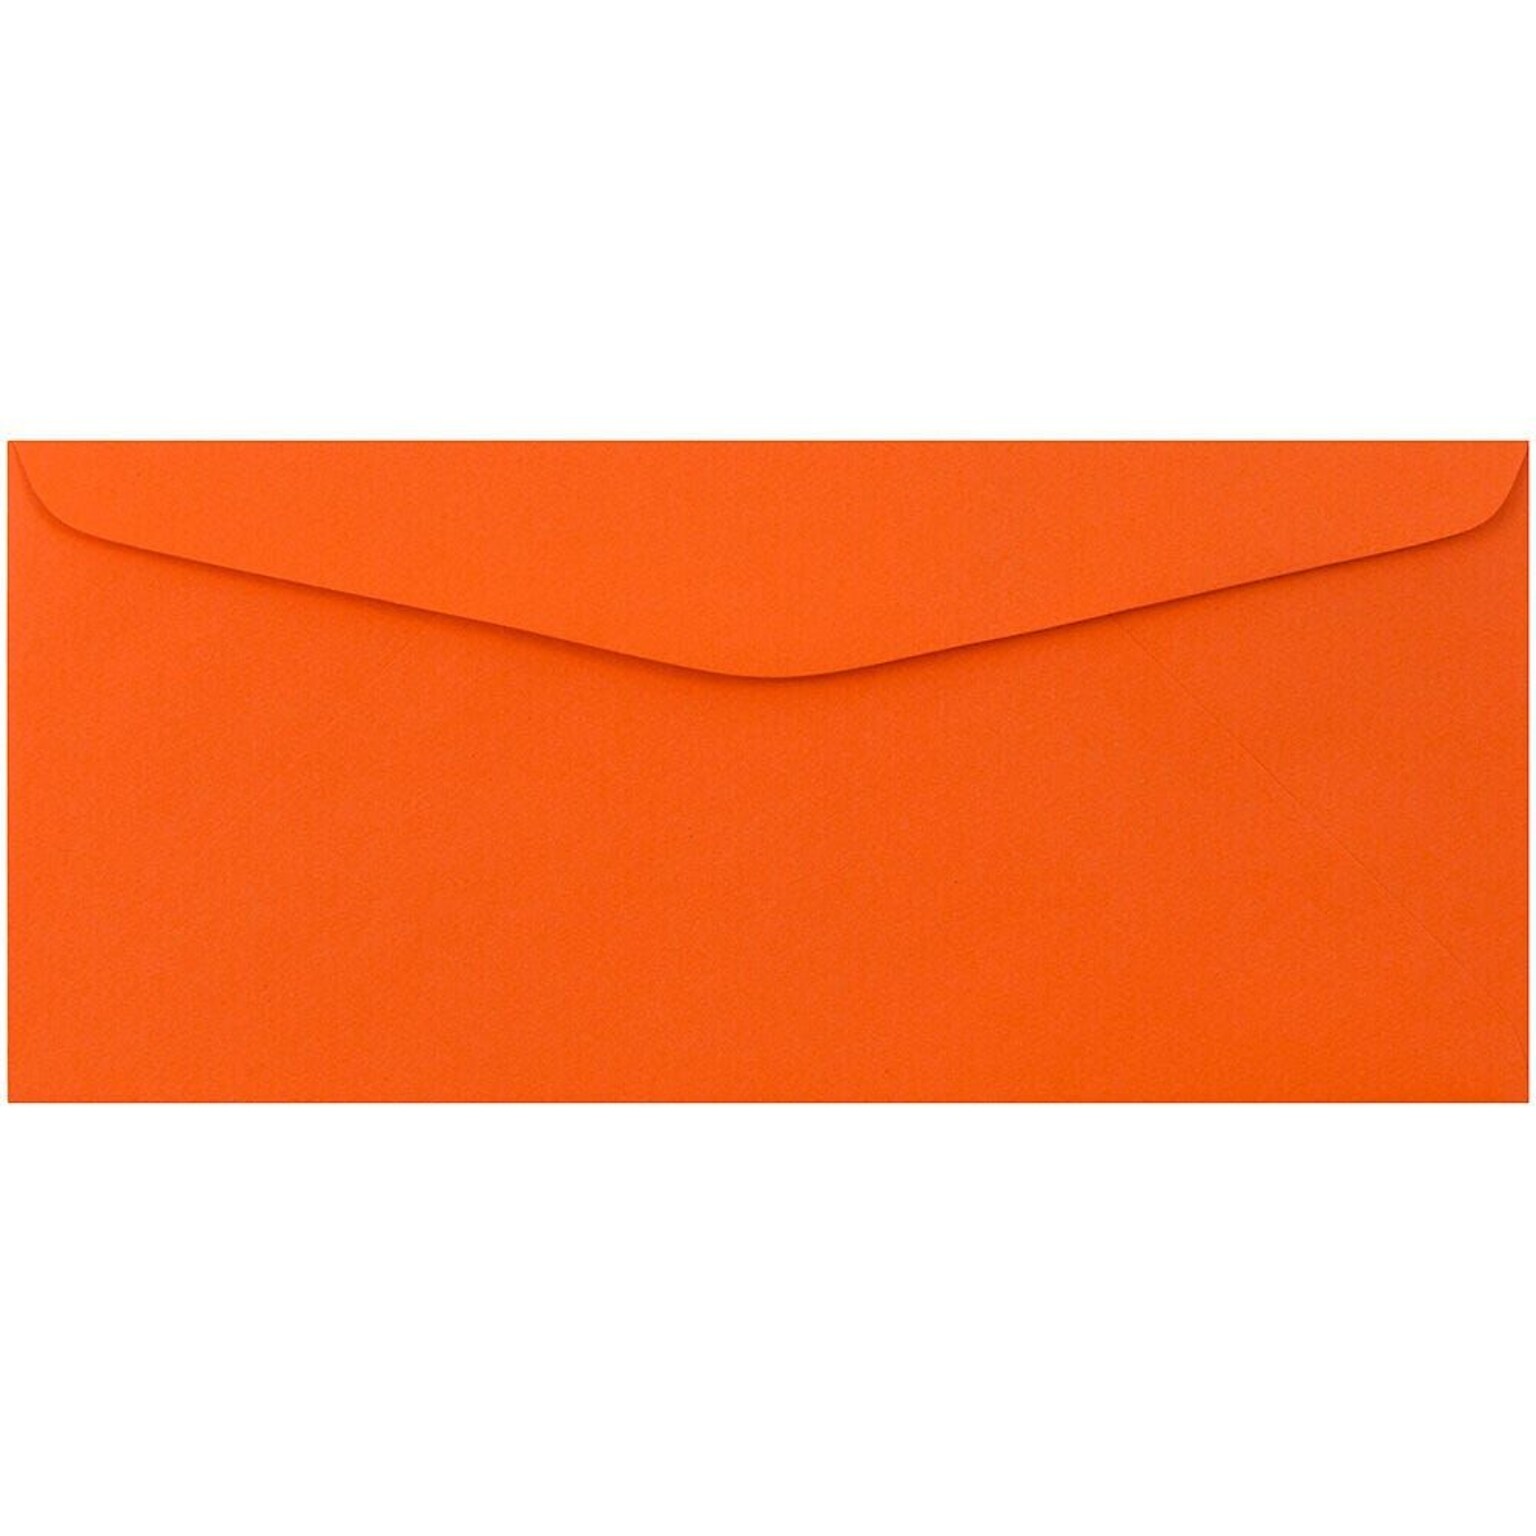 JAM Paper #9 Business Envelope, 3 7/8 x 8 7/8, Orange, 100/Pack (1532899D)